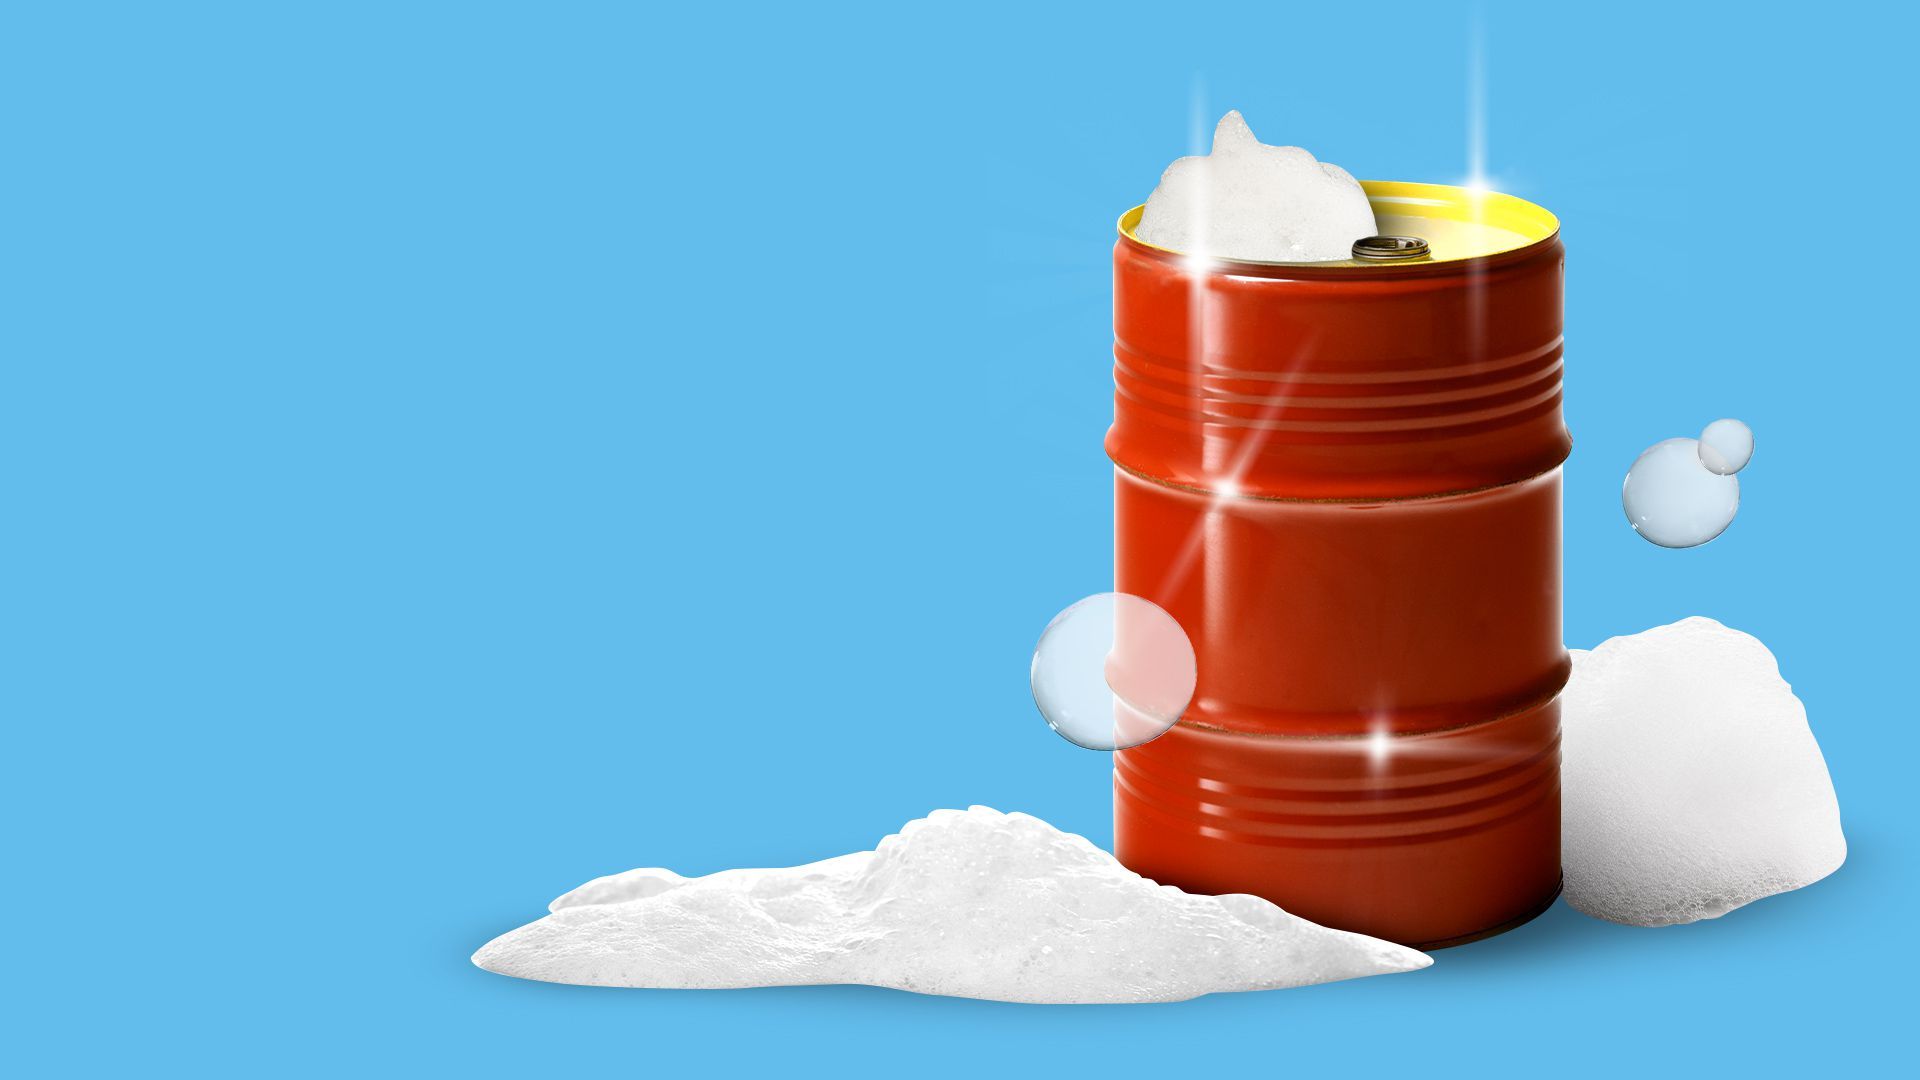 Illustration of soap suds on a sparkling clean oil barrel